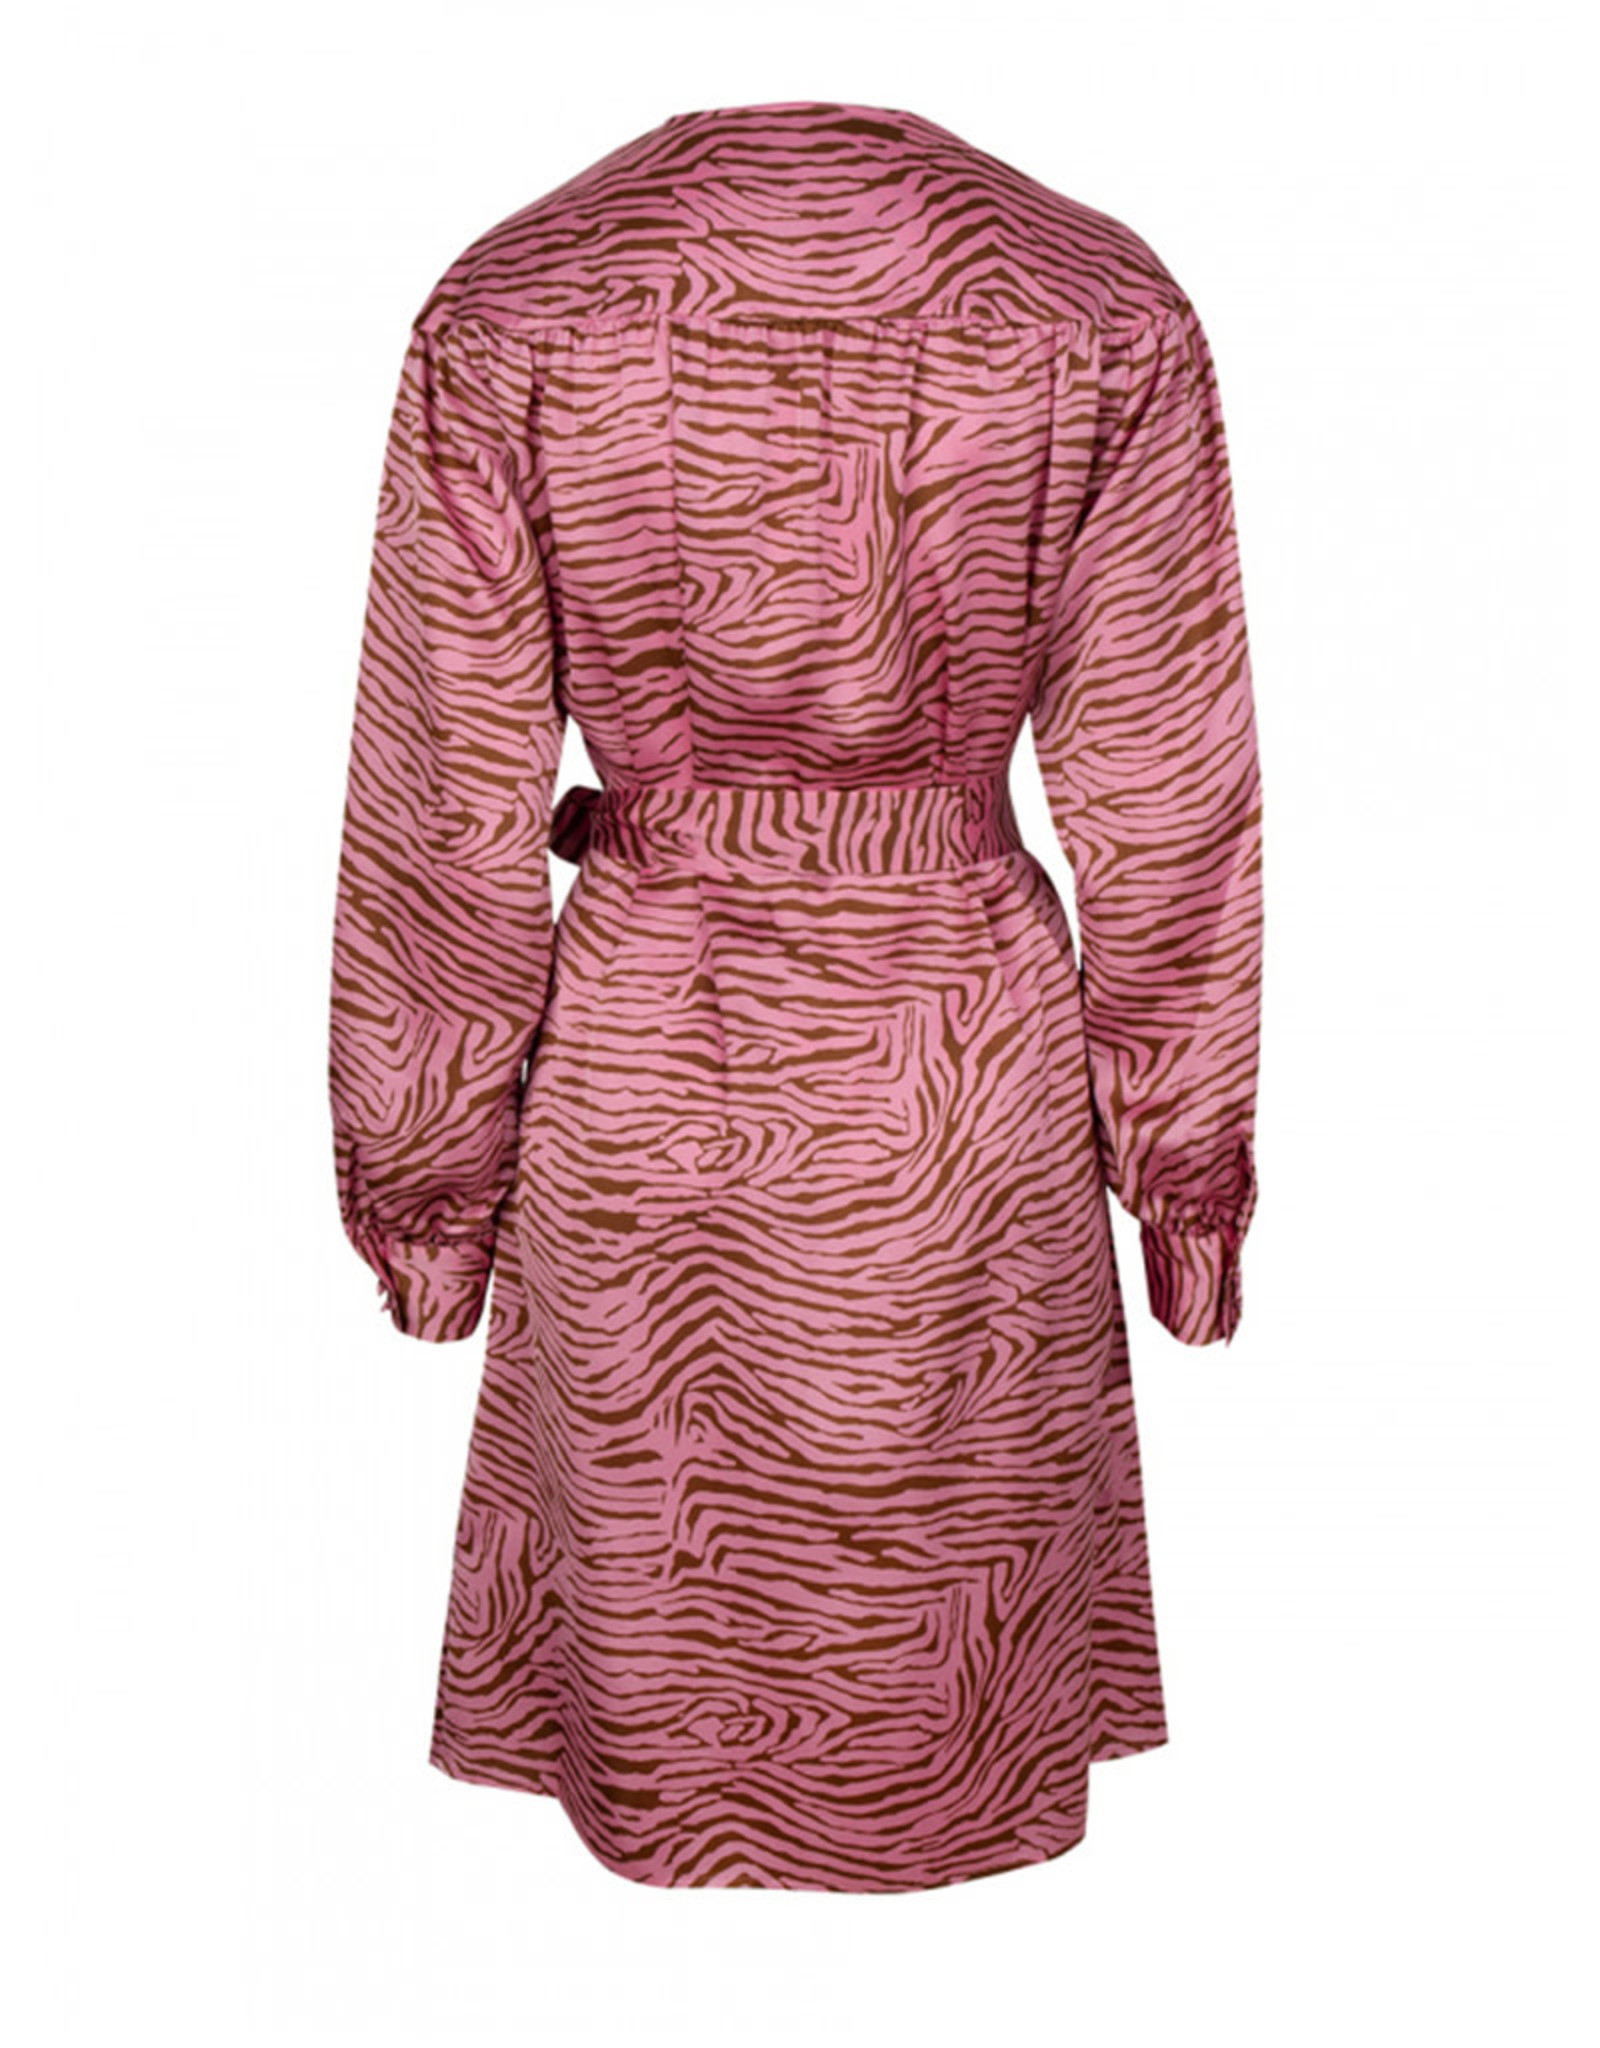 dante6 Roisin Print Dress